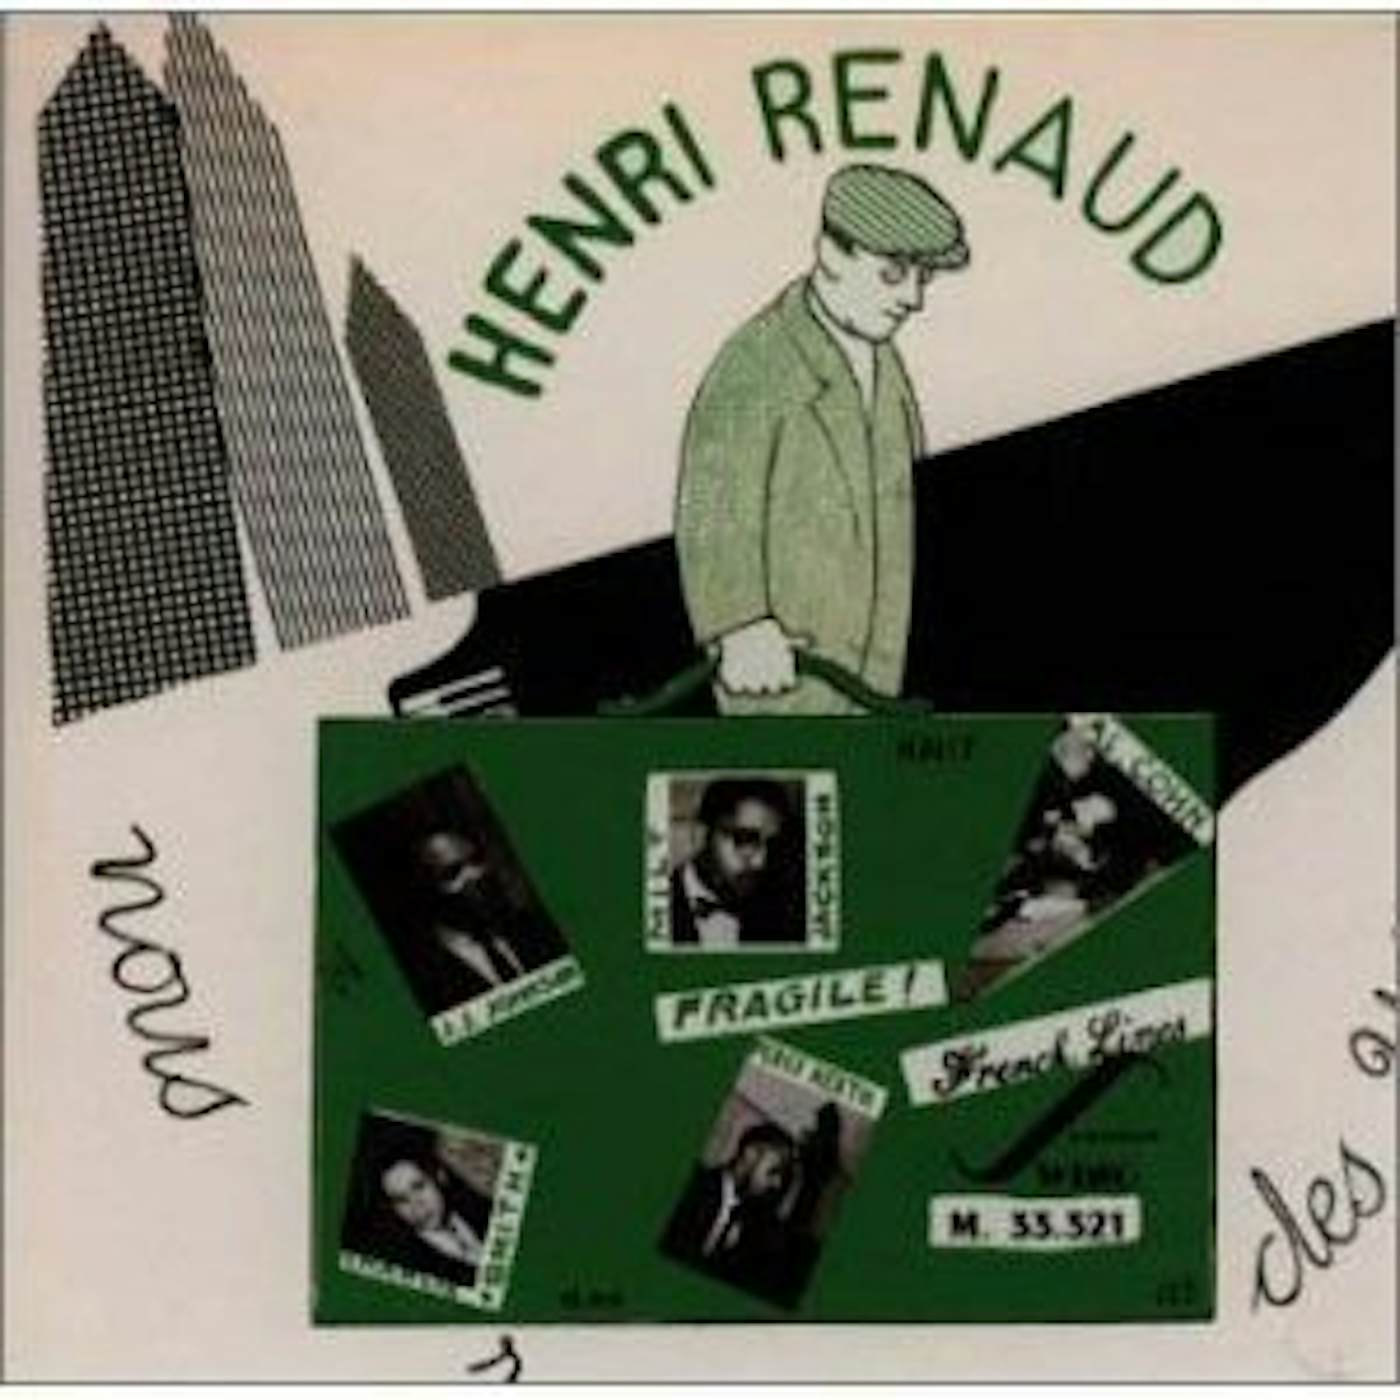 Henri Renaud ALLSTARS VOL 2 Vinyl Record